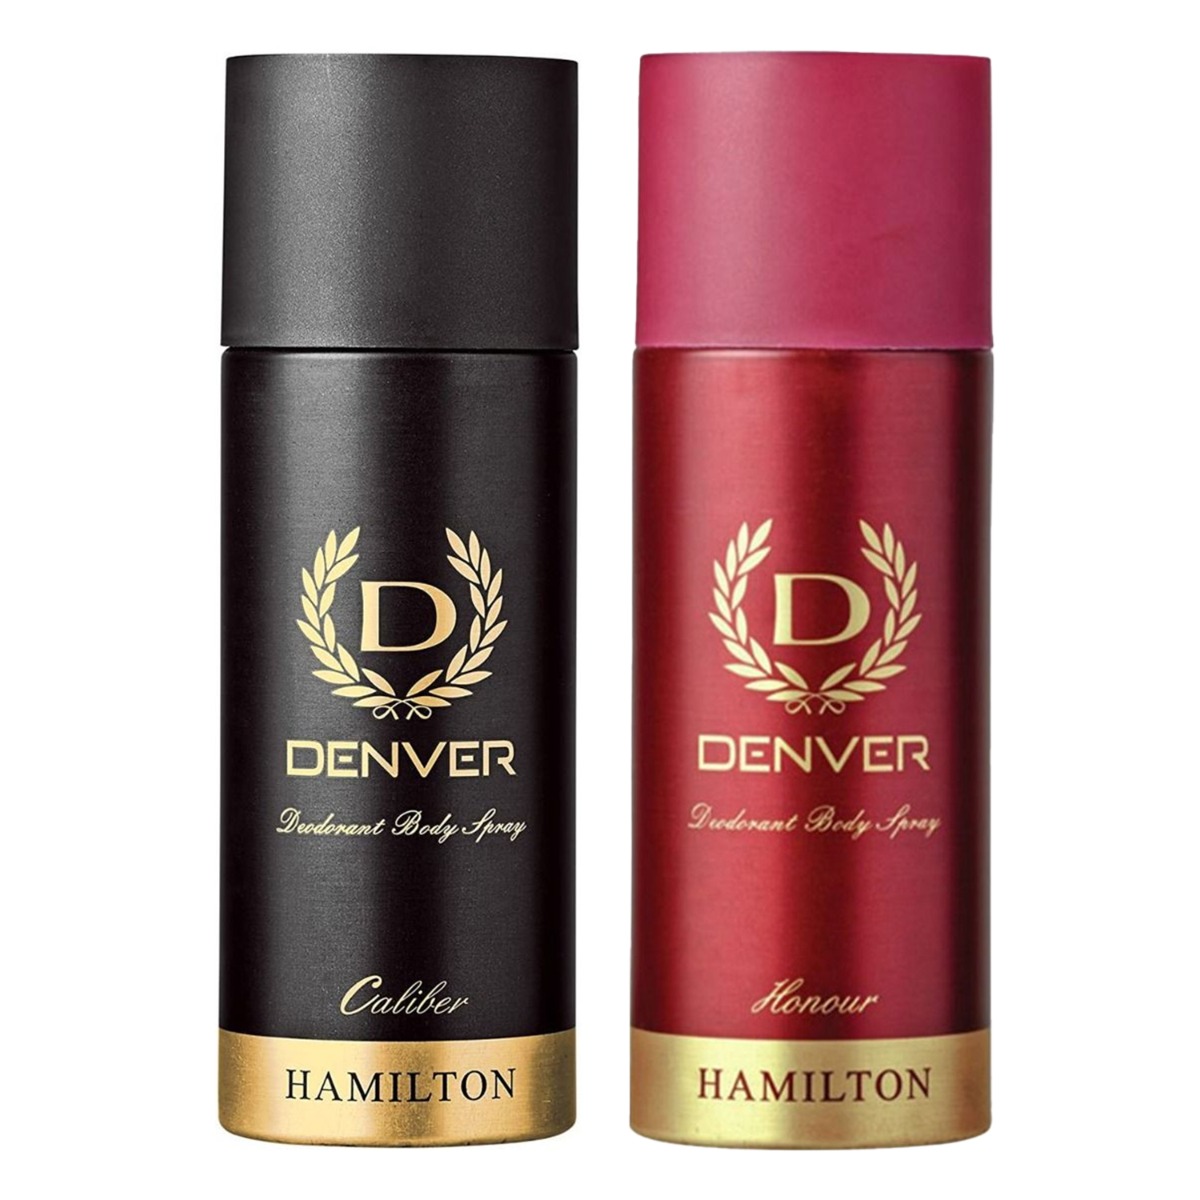 Denver Hamilton Caliber & Hamilton Honour Deodorant Body Spray, 165ml Each